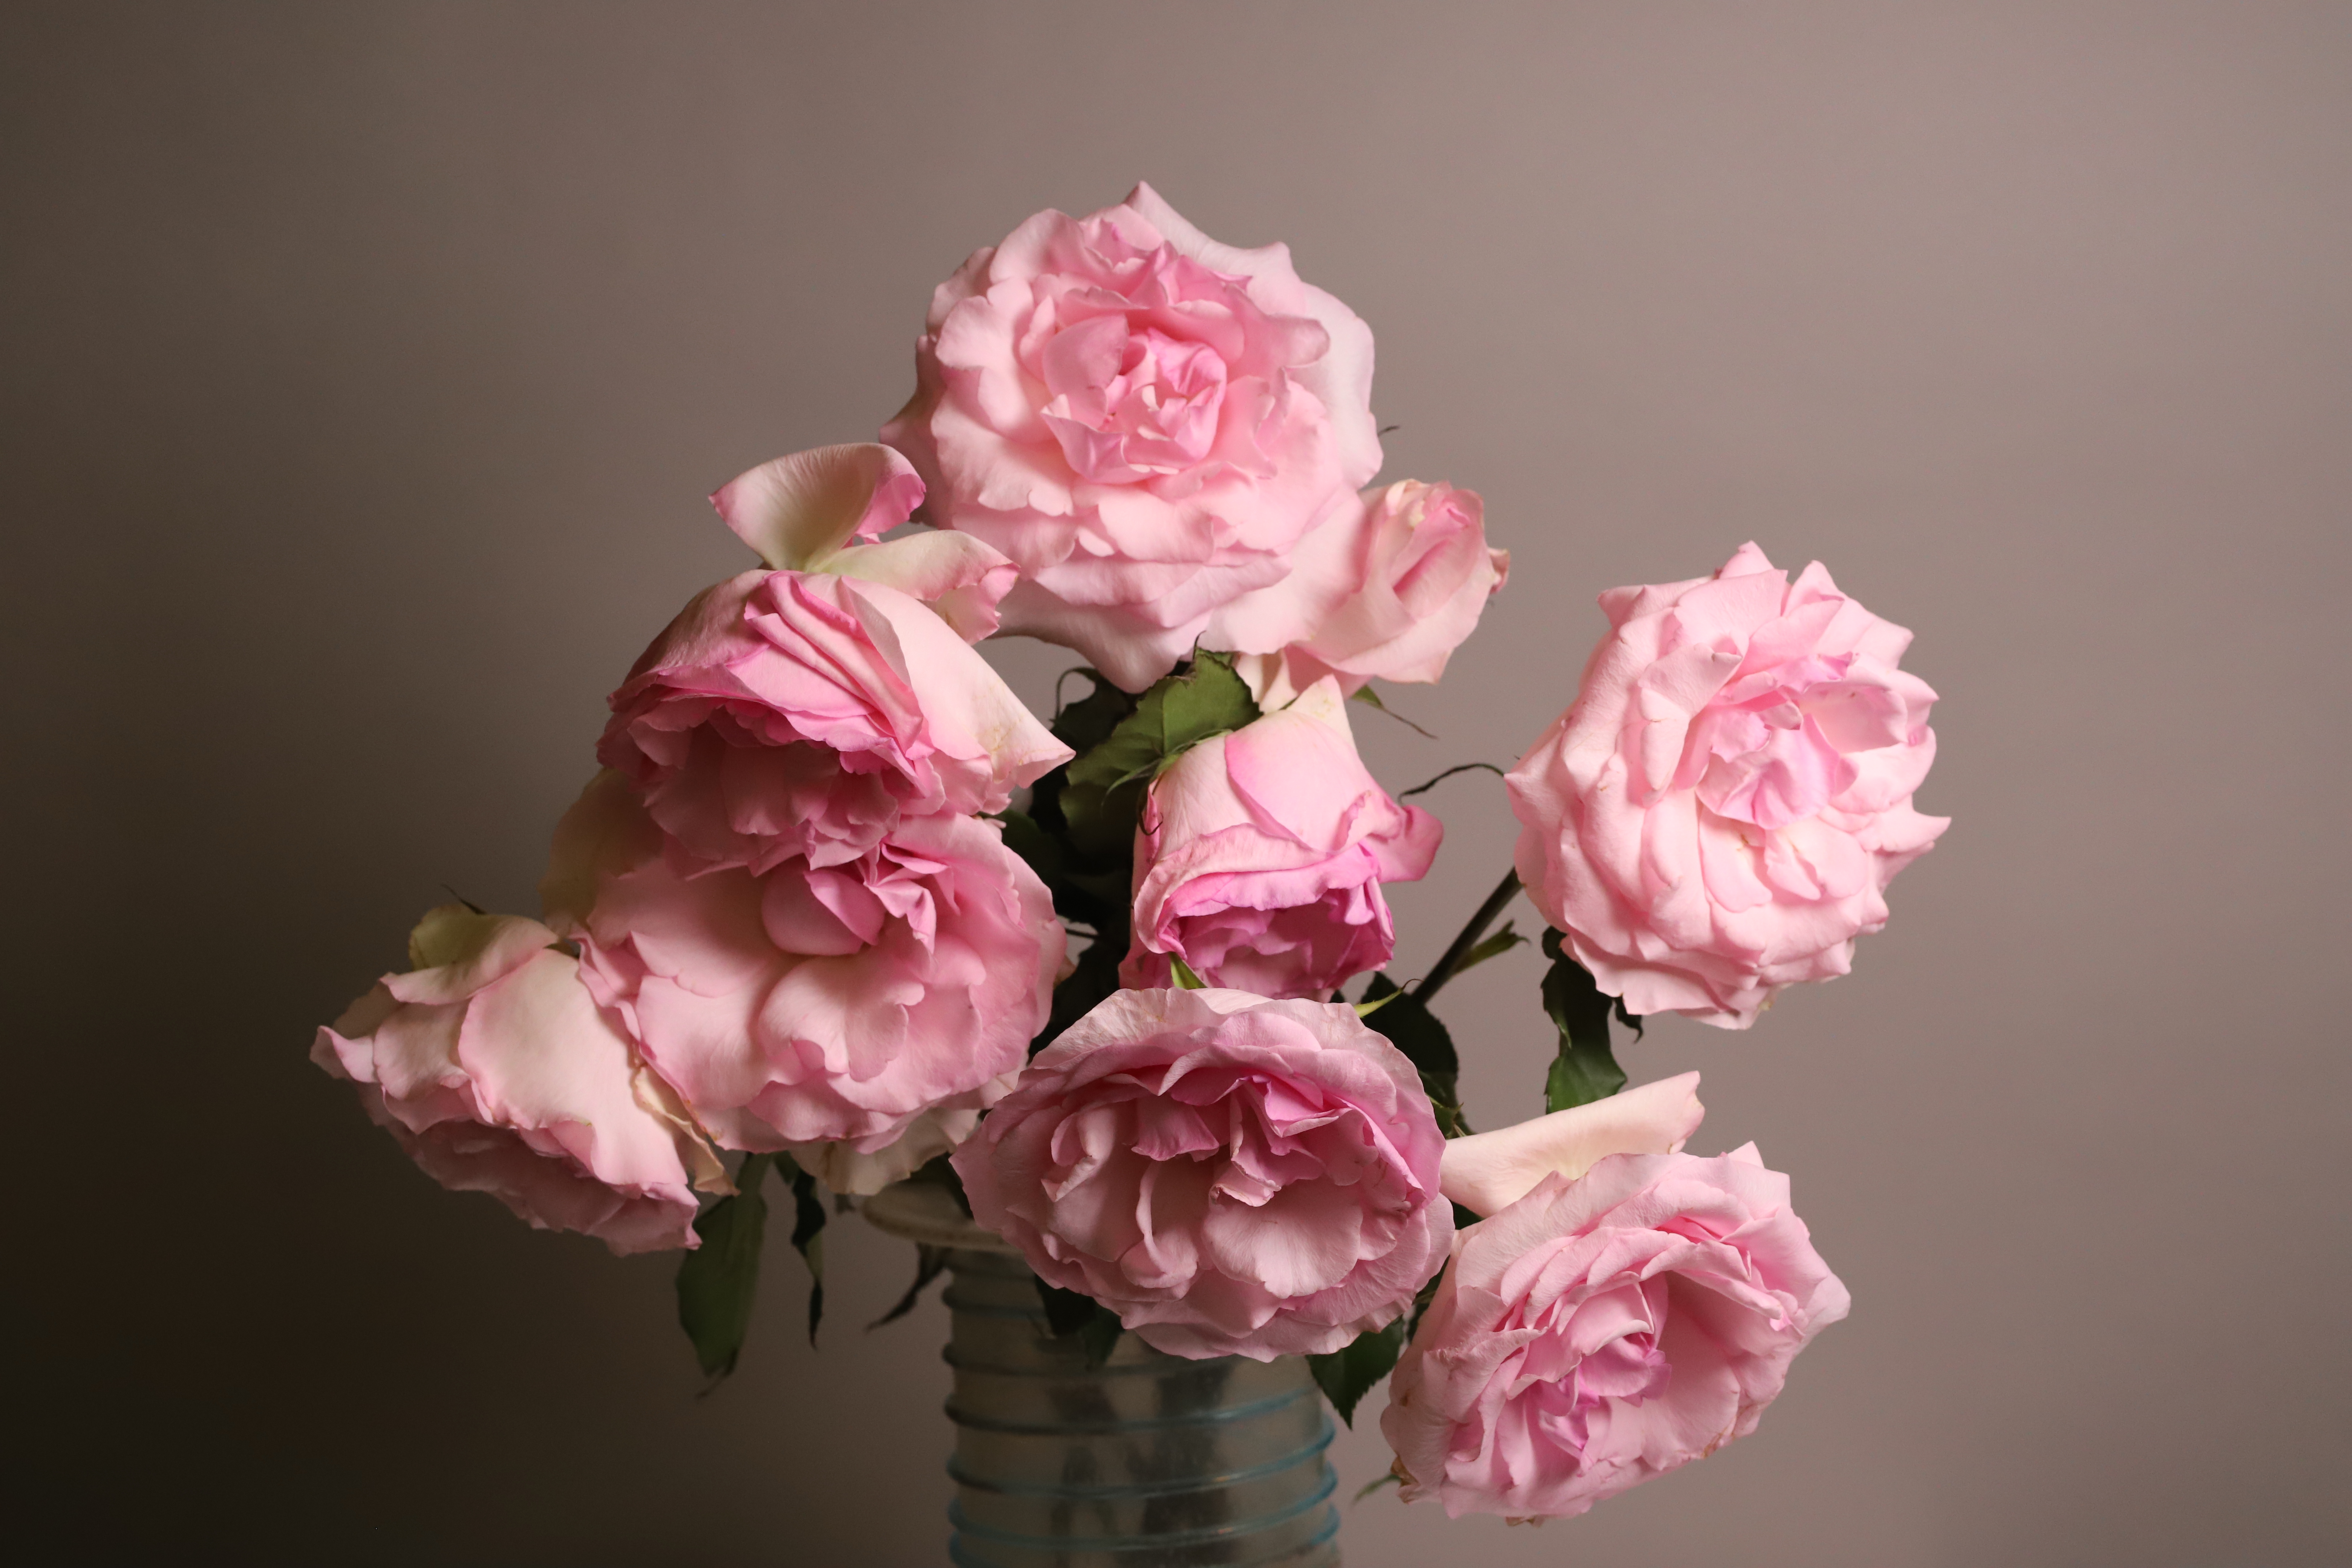 Leon Capetanos - Pink Roses 1/10 - photograph - 17 x 22